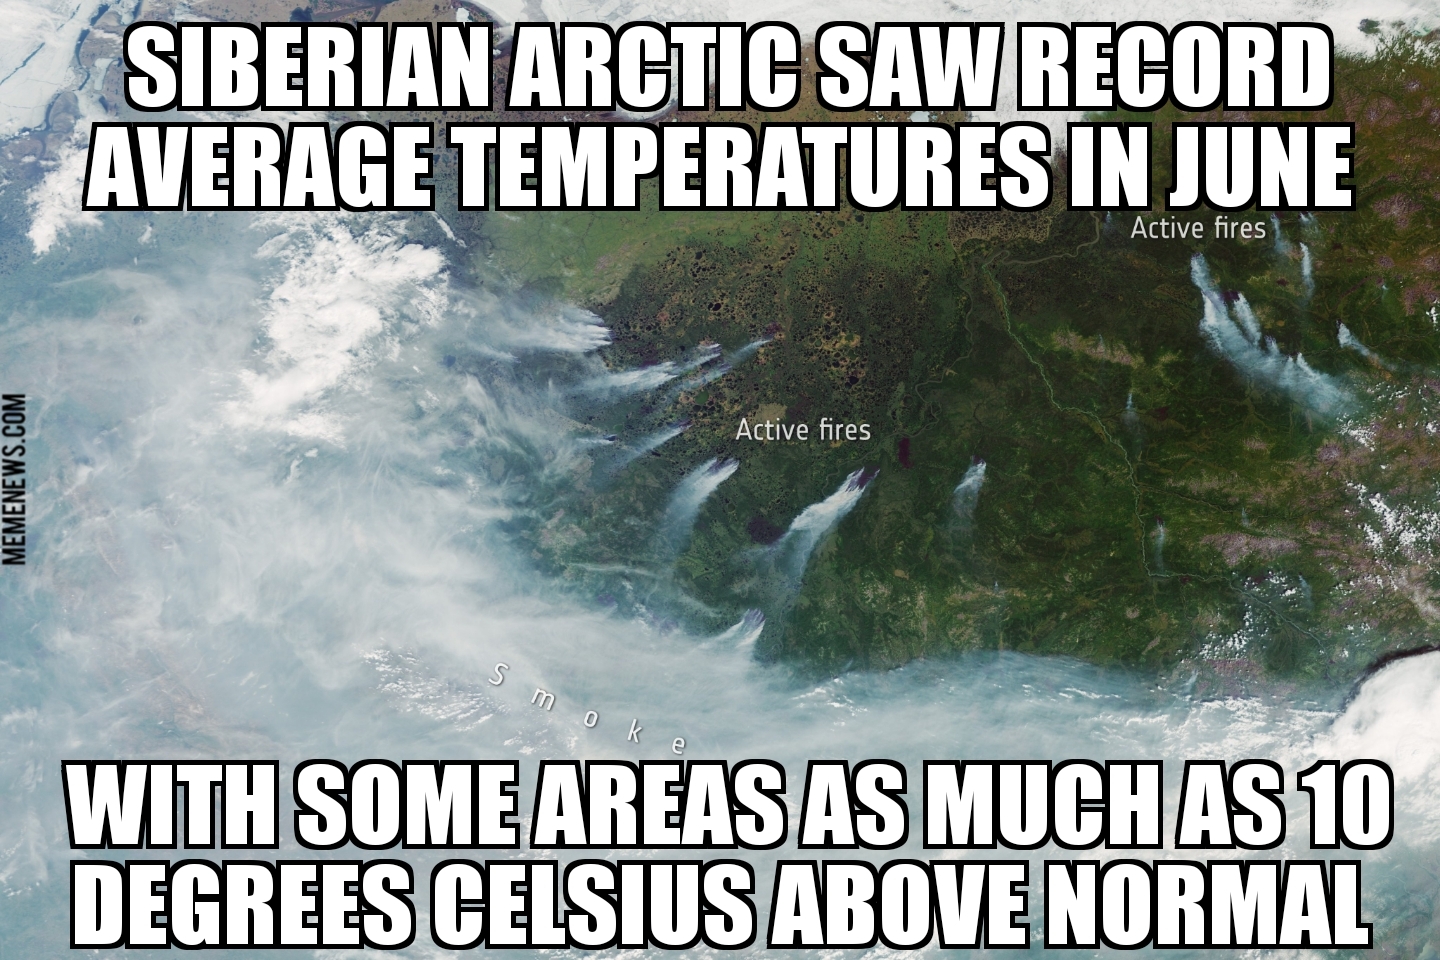 Siberian Arctic saw record temperatures in June